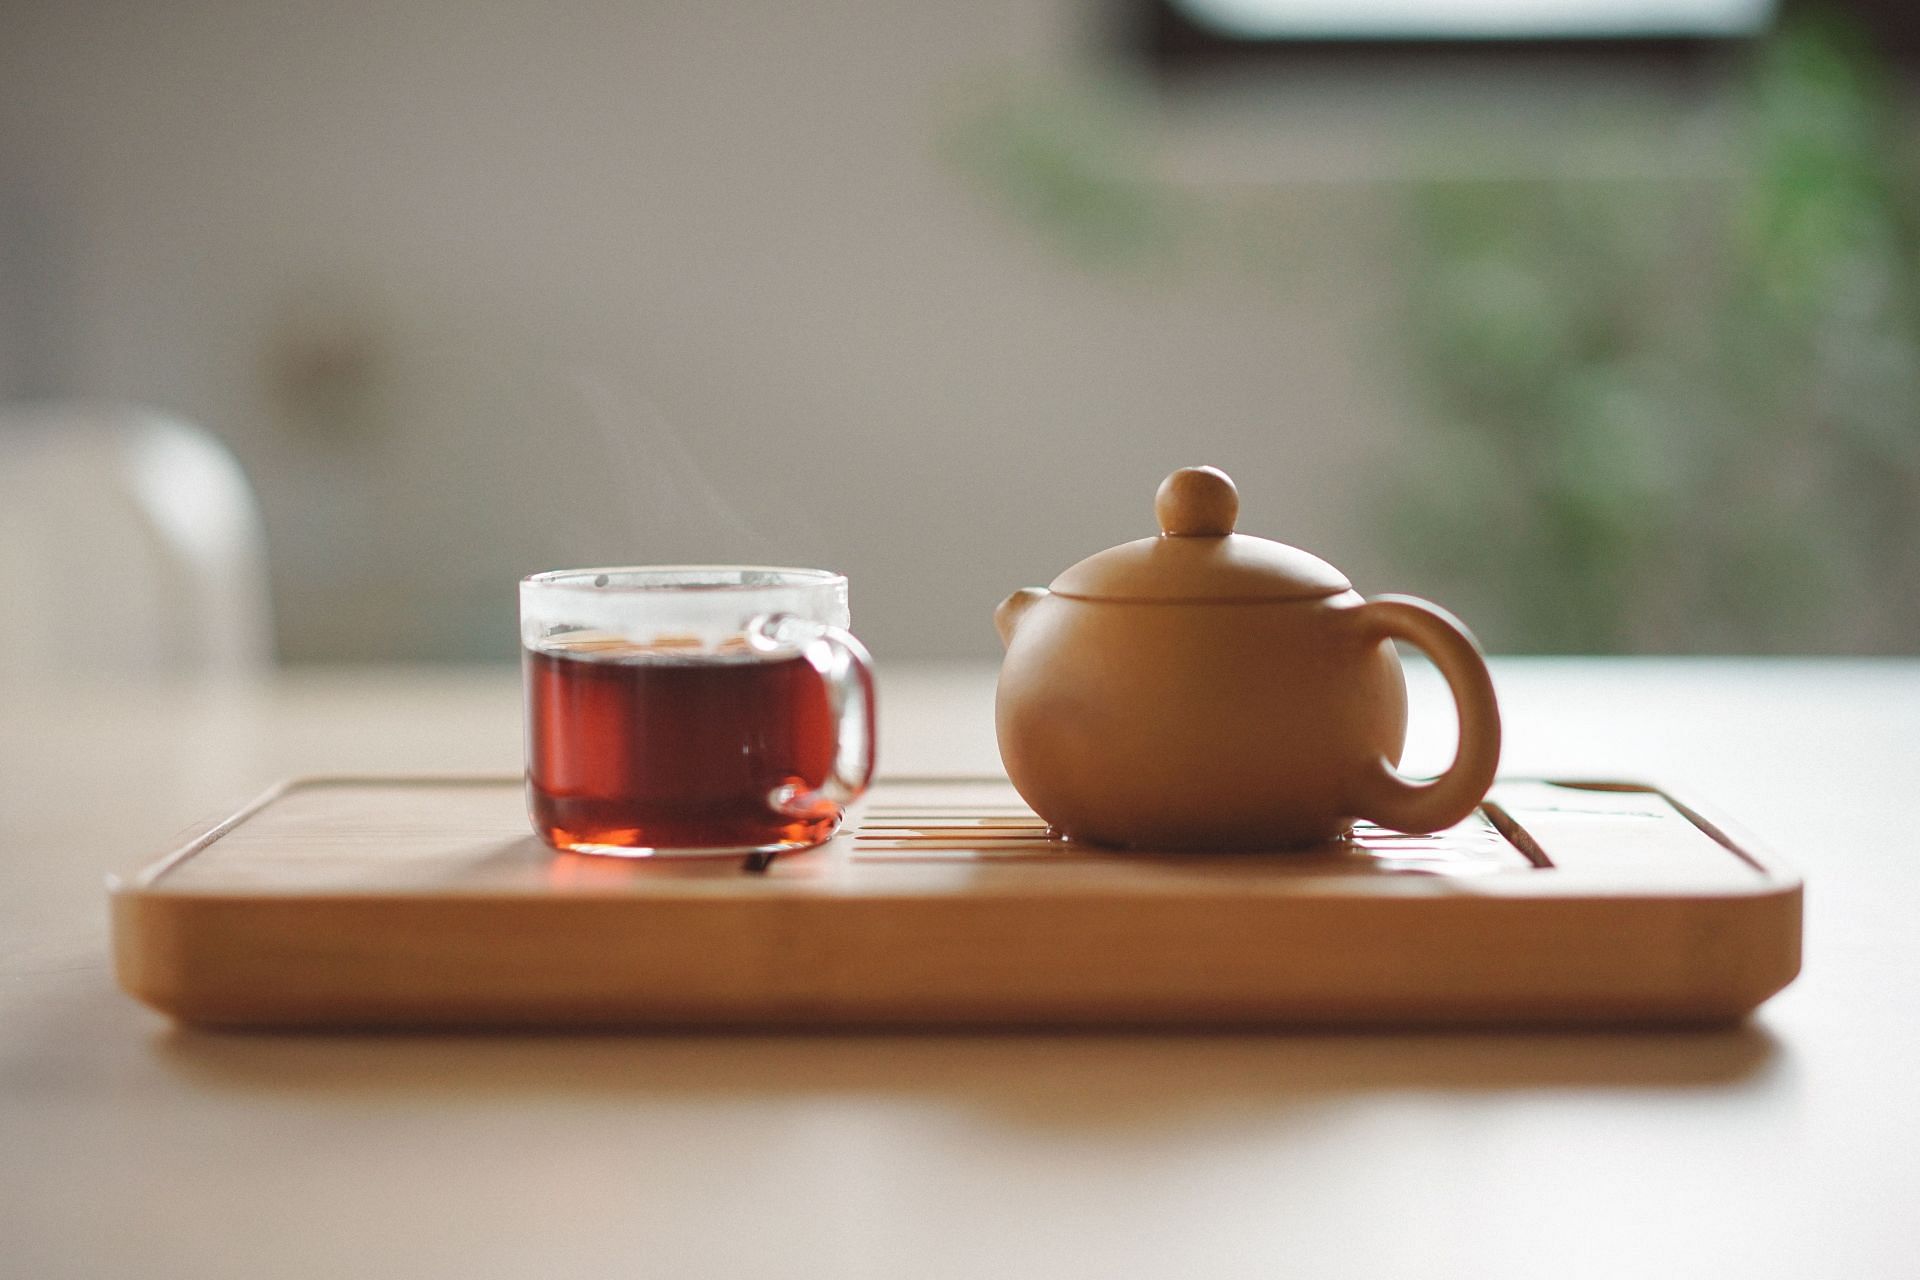 This tea is easy to make. (Image via Unsplash/ Manki Kim)